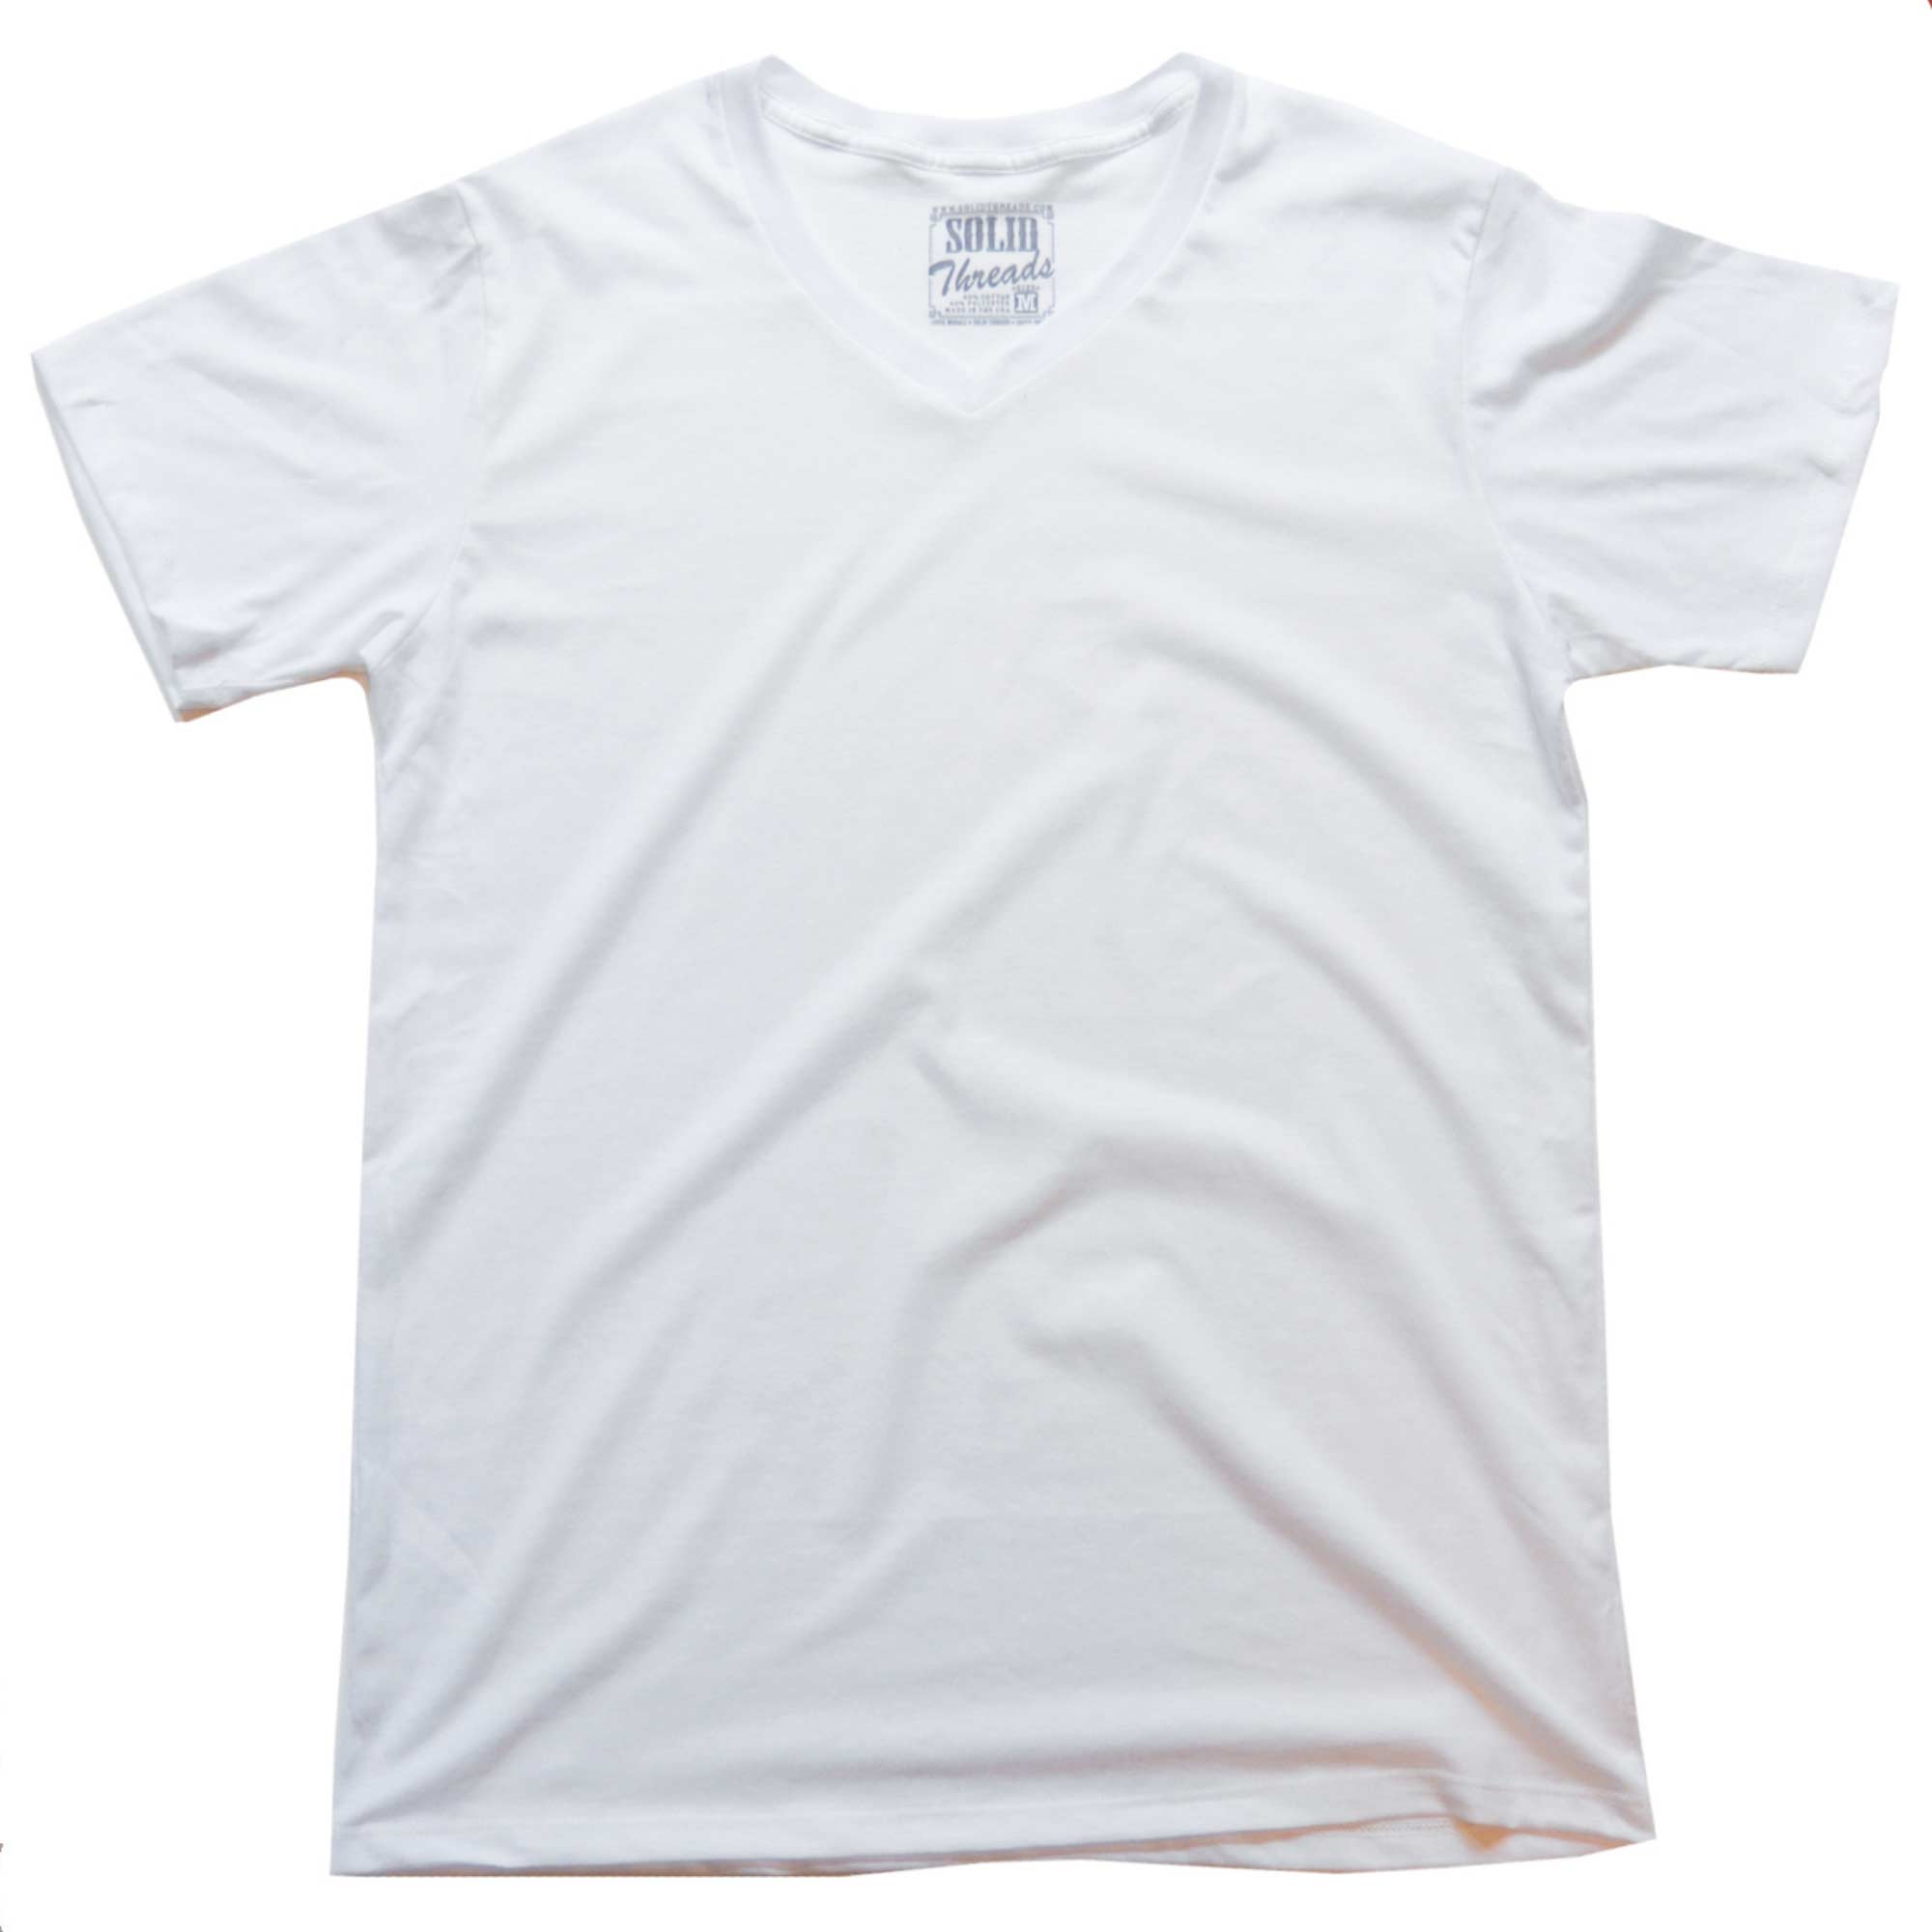 Men's Solid Threads V-Neck T-shirt